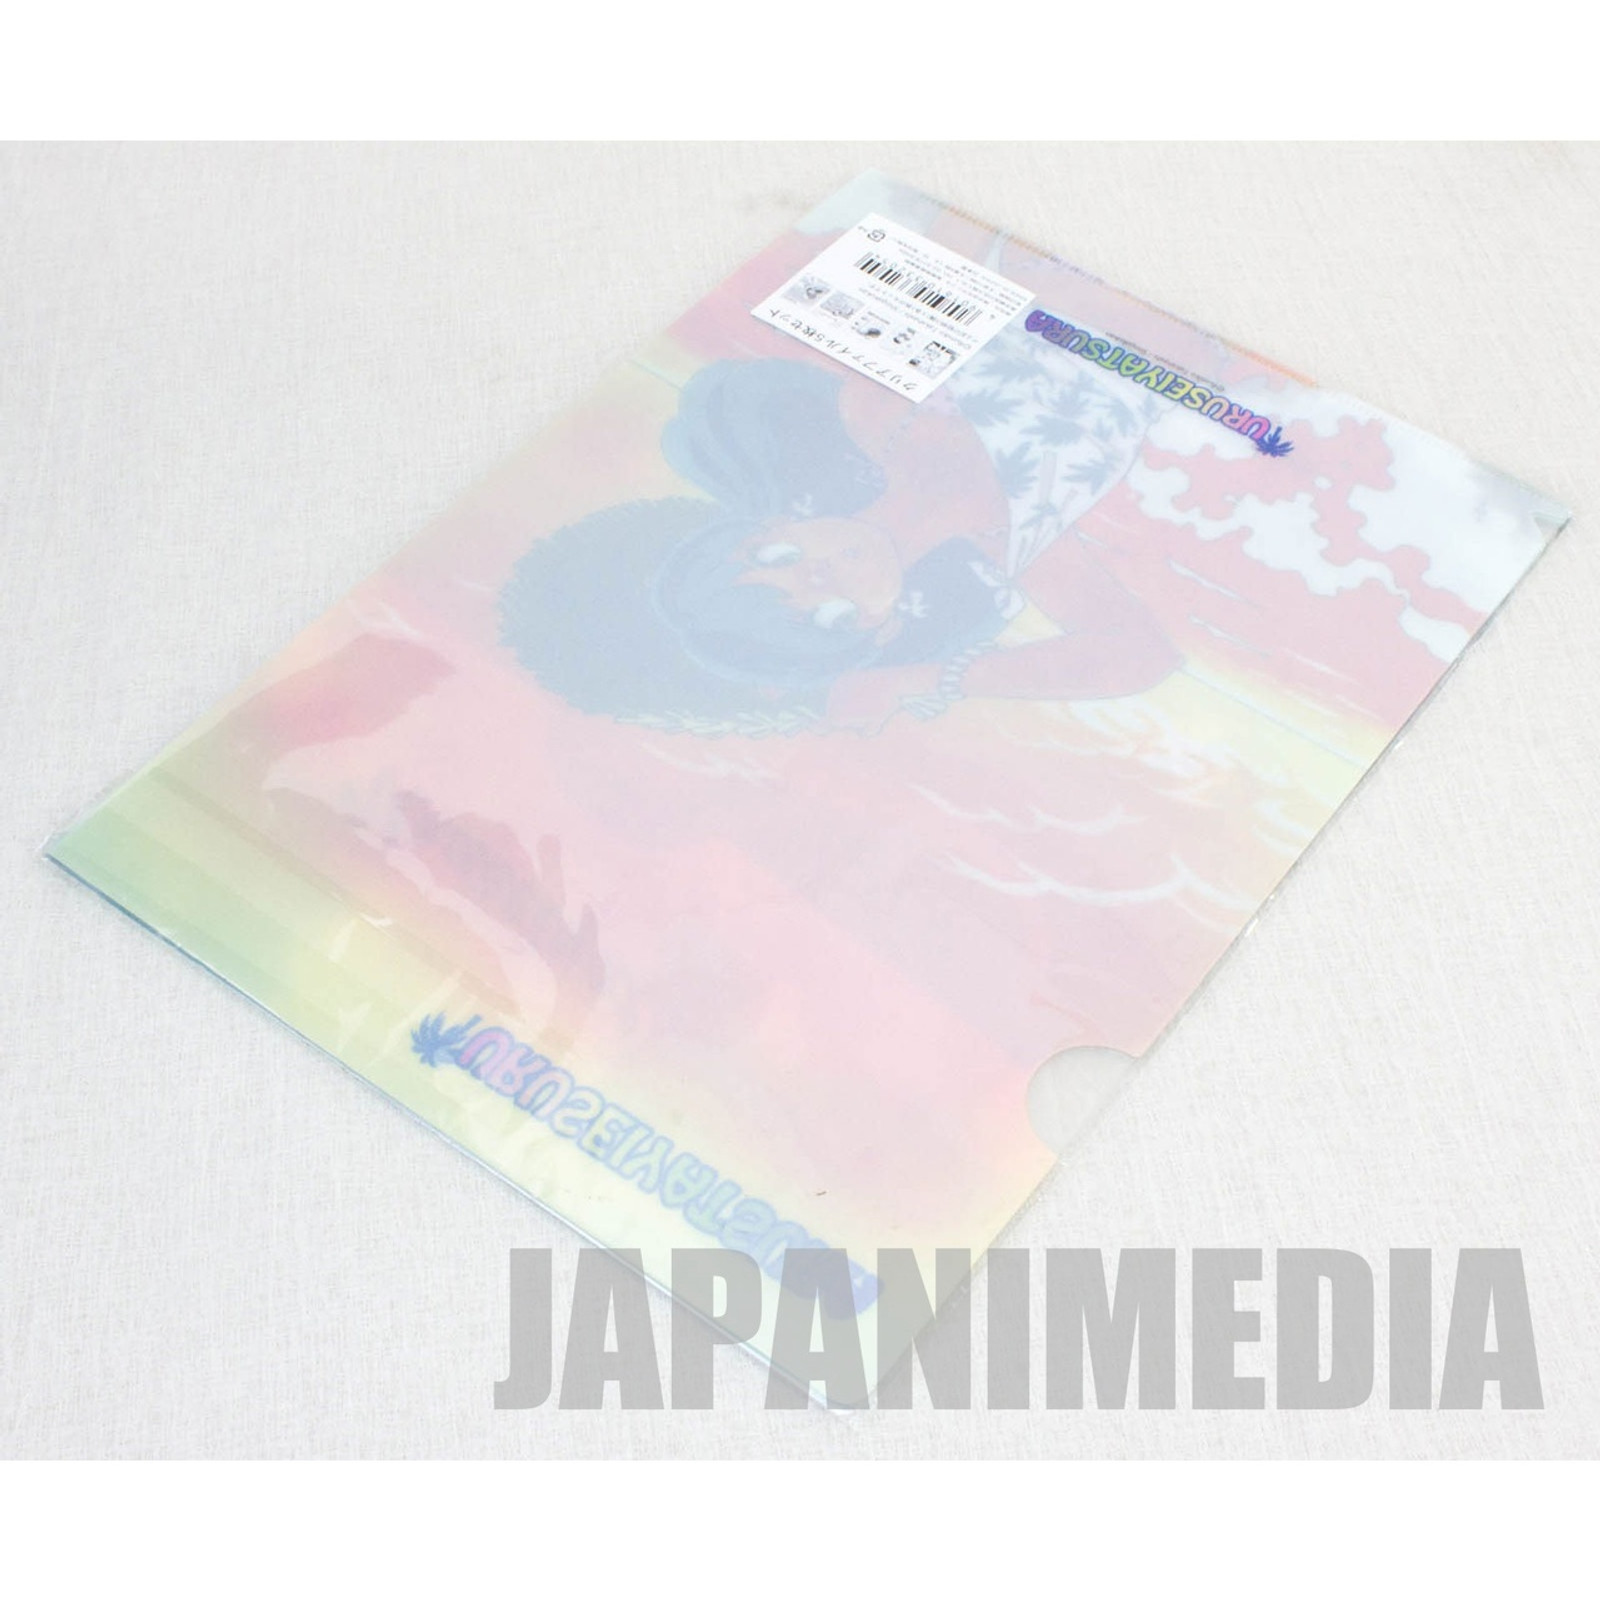 Urusei Yatsura Clear Folder File 5pc set [Lum,Ataru] JAPAN ANIME MANGA